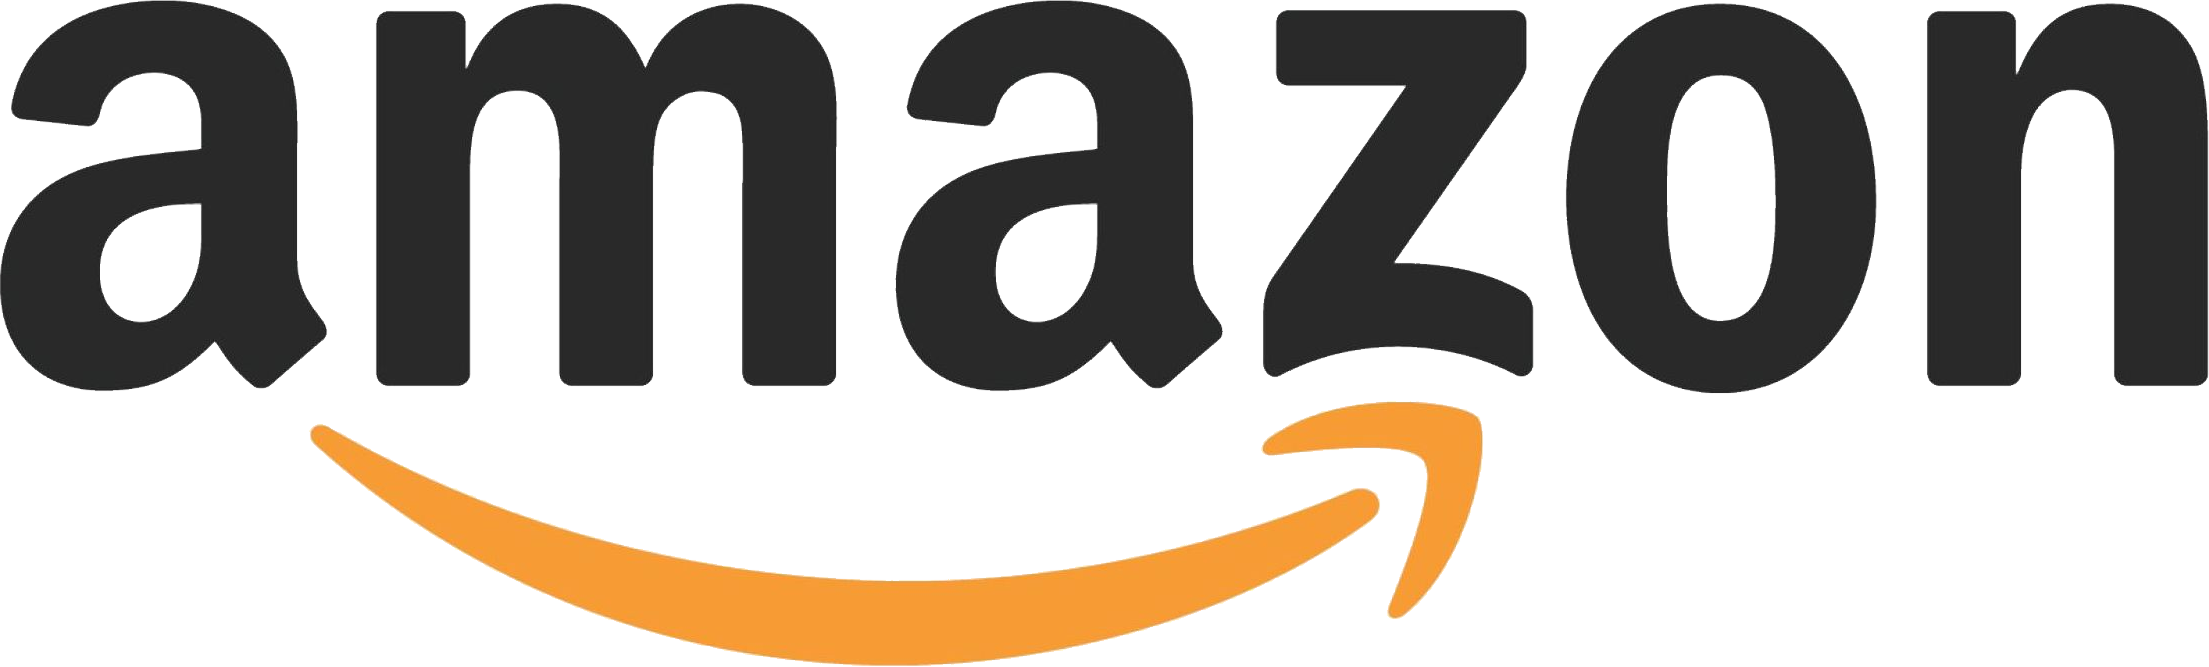 Amazon Logo: Recognizable emblem of the Amazon brand